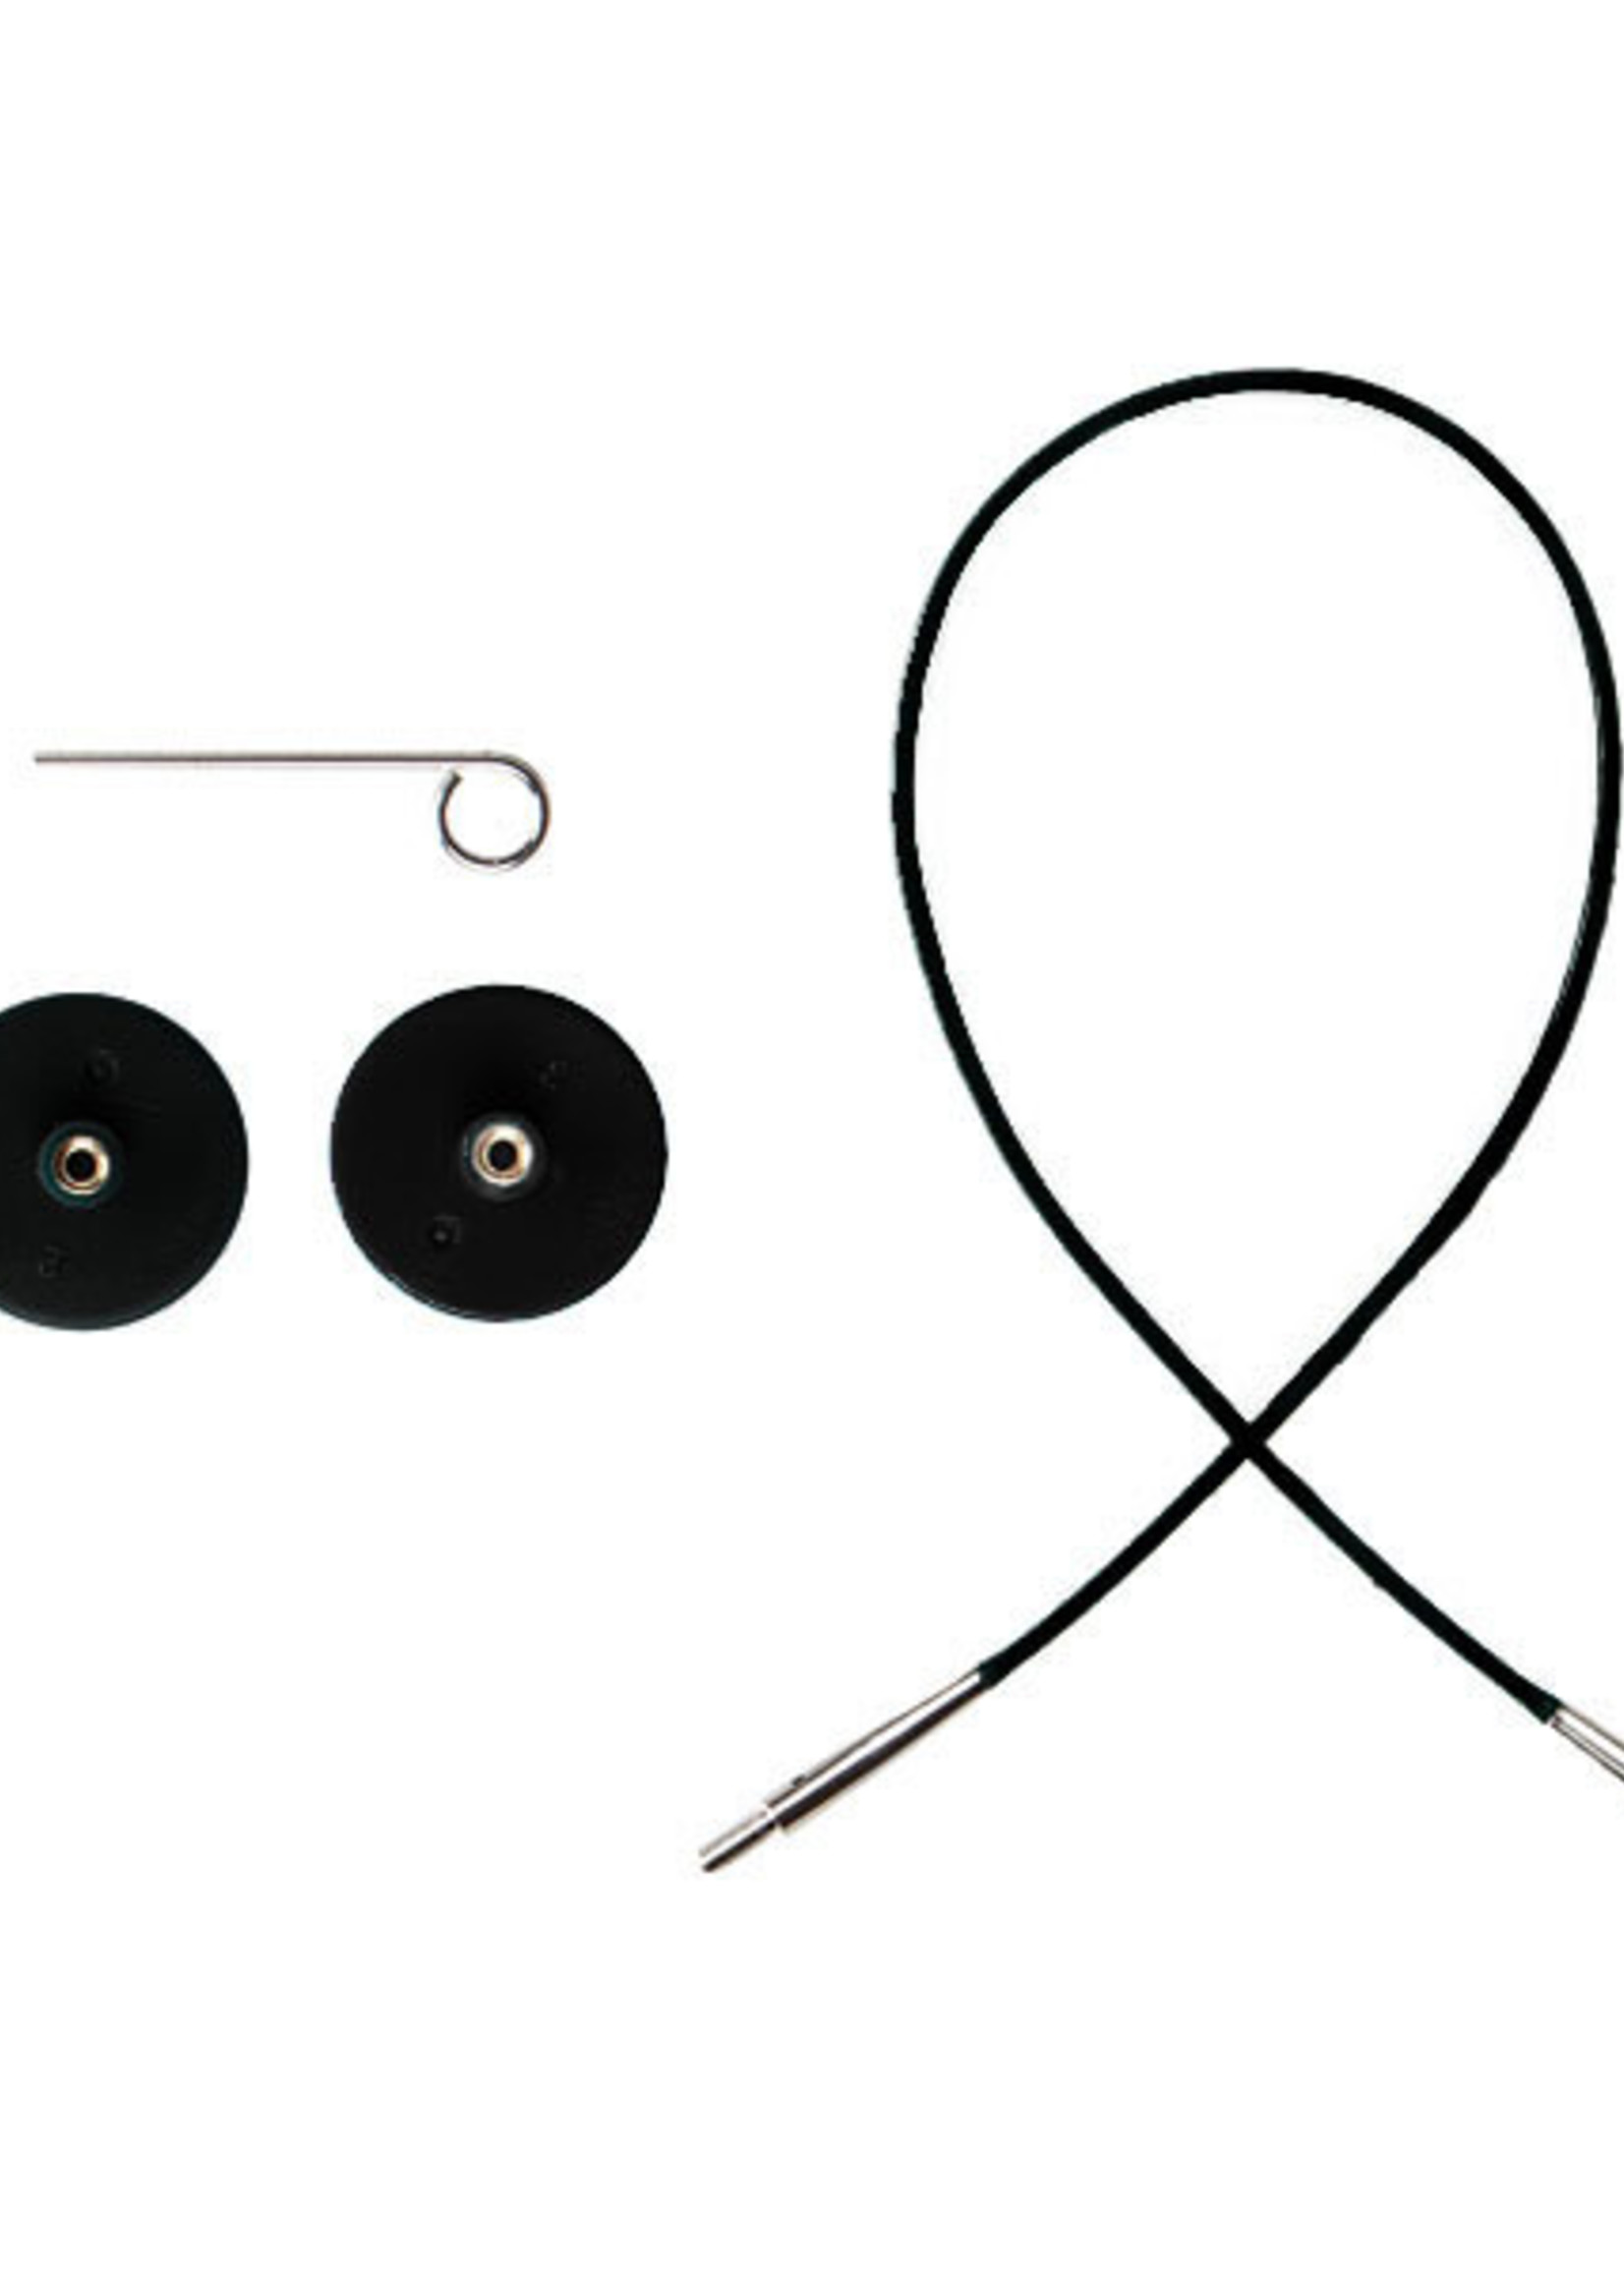 Knit Picks Knit Picks Interchangeable Cable - Black 24"